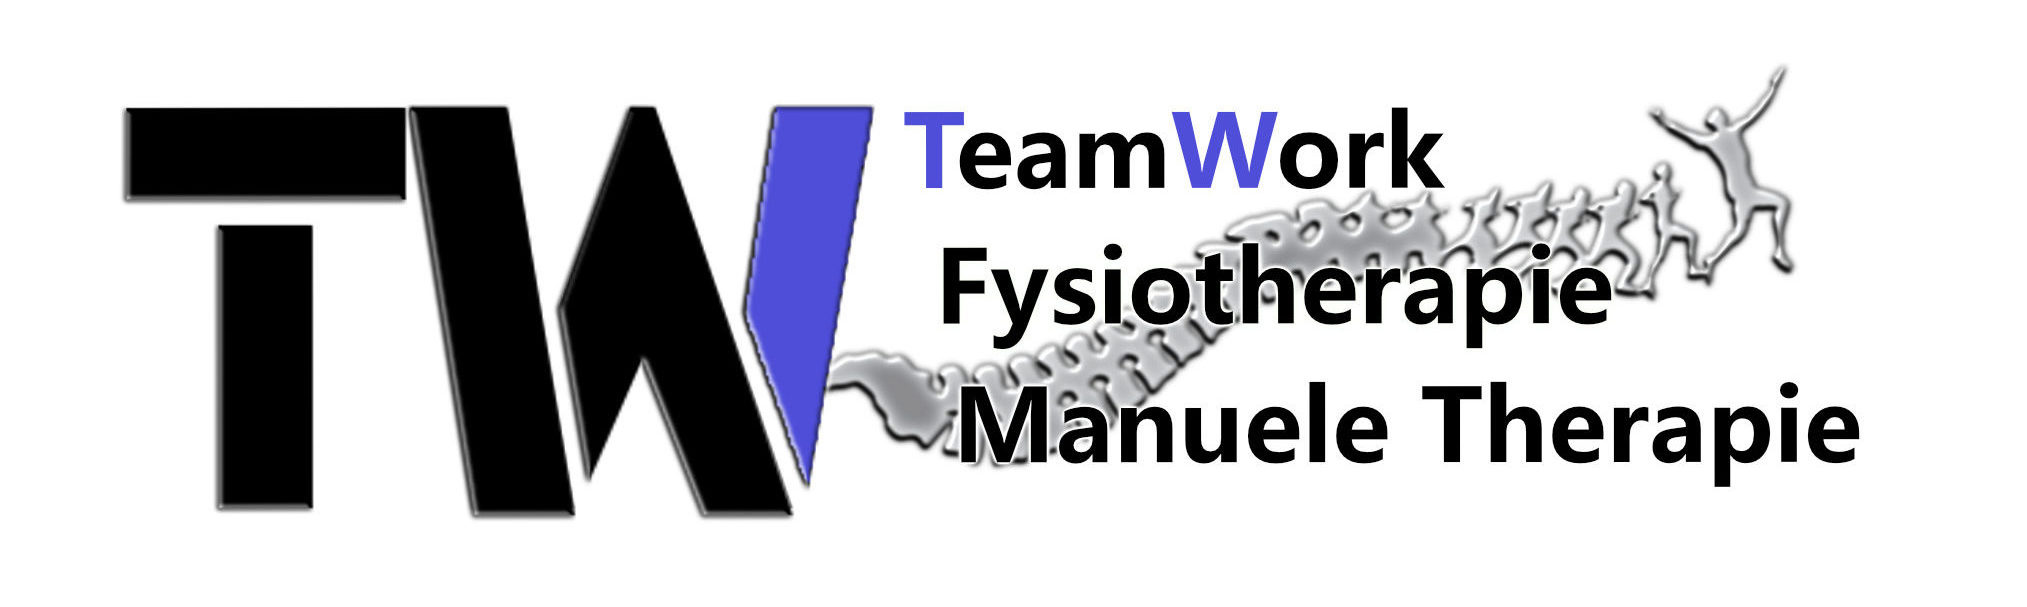 TeamWork Fysiotherapie & Manuele Therapie